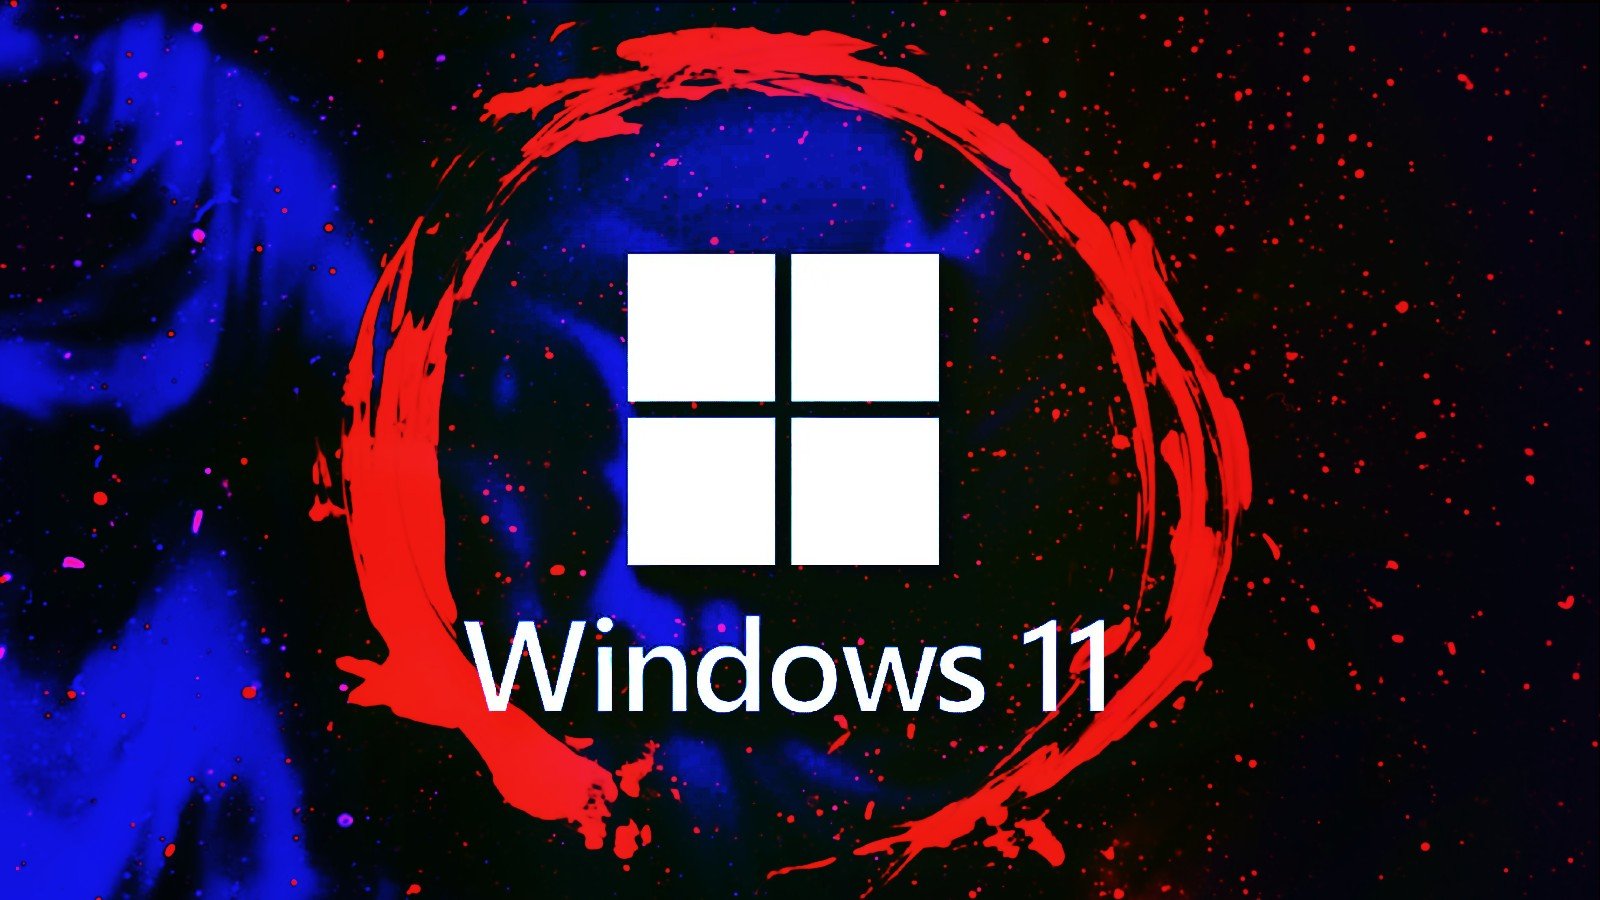 Windows 11 截图工具隐私漏洞暴露裁剪图像内容